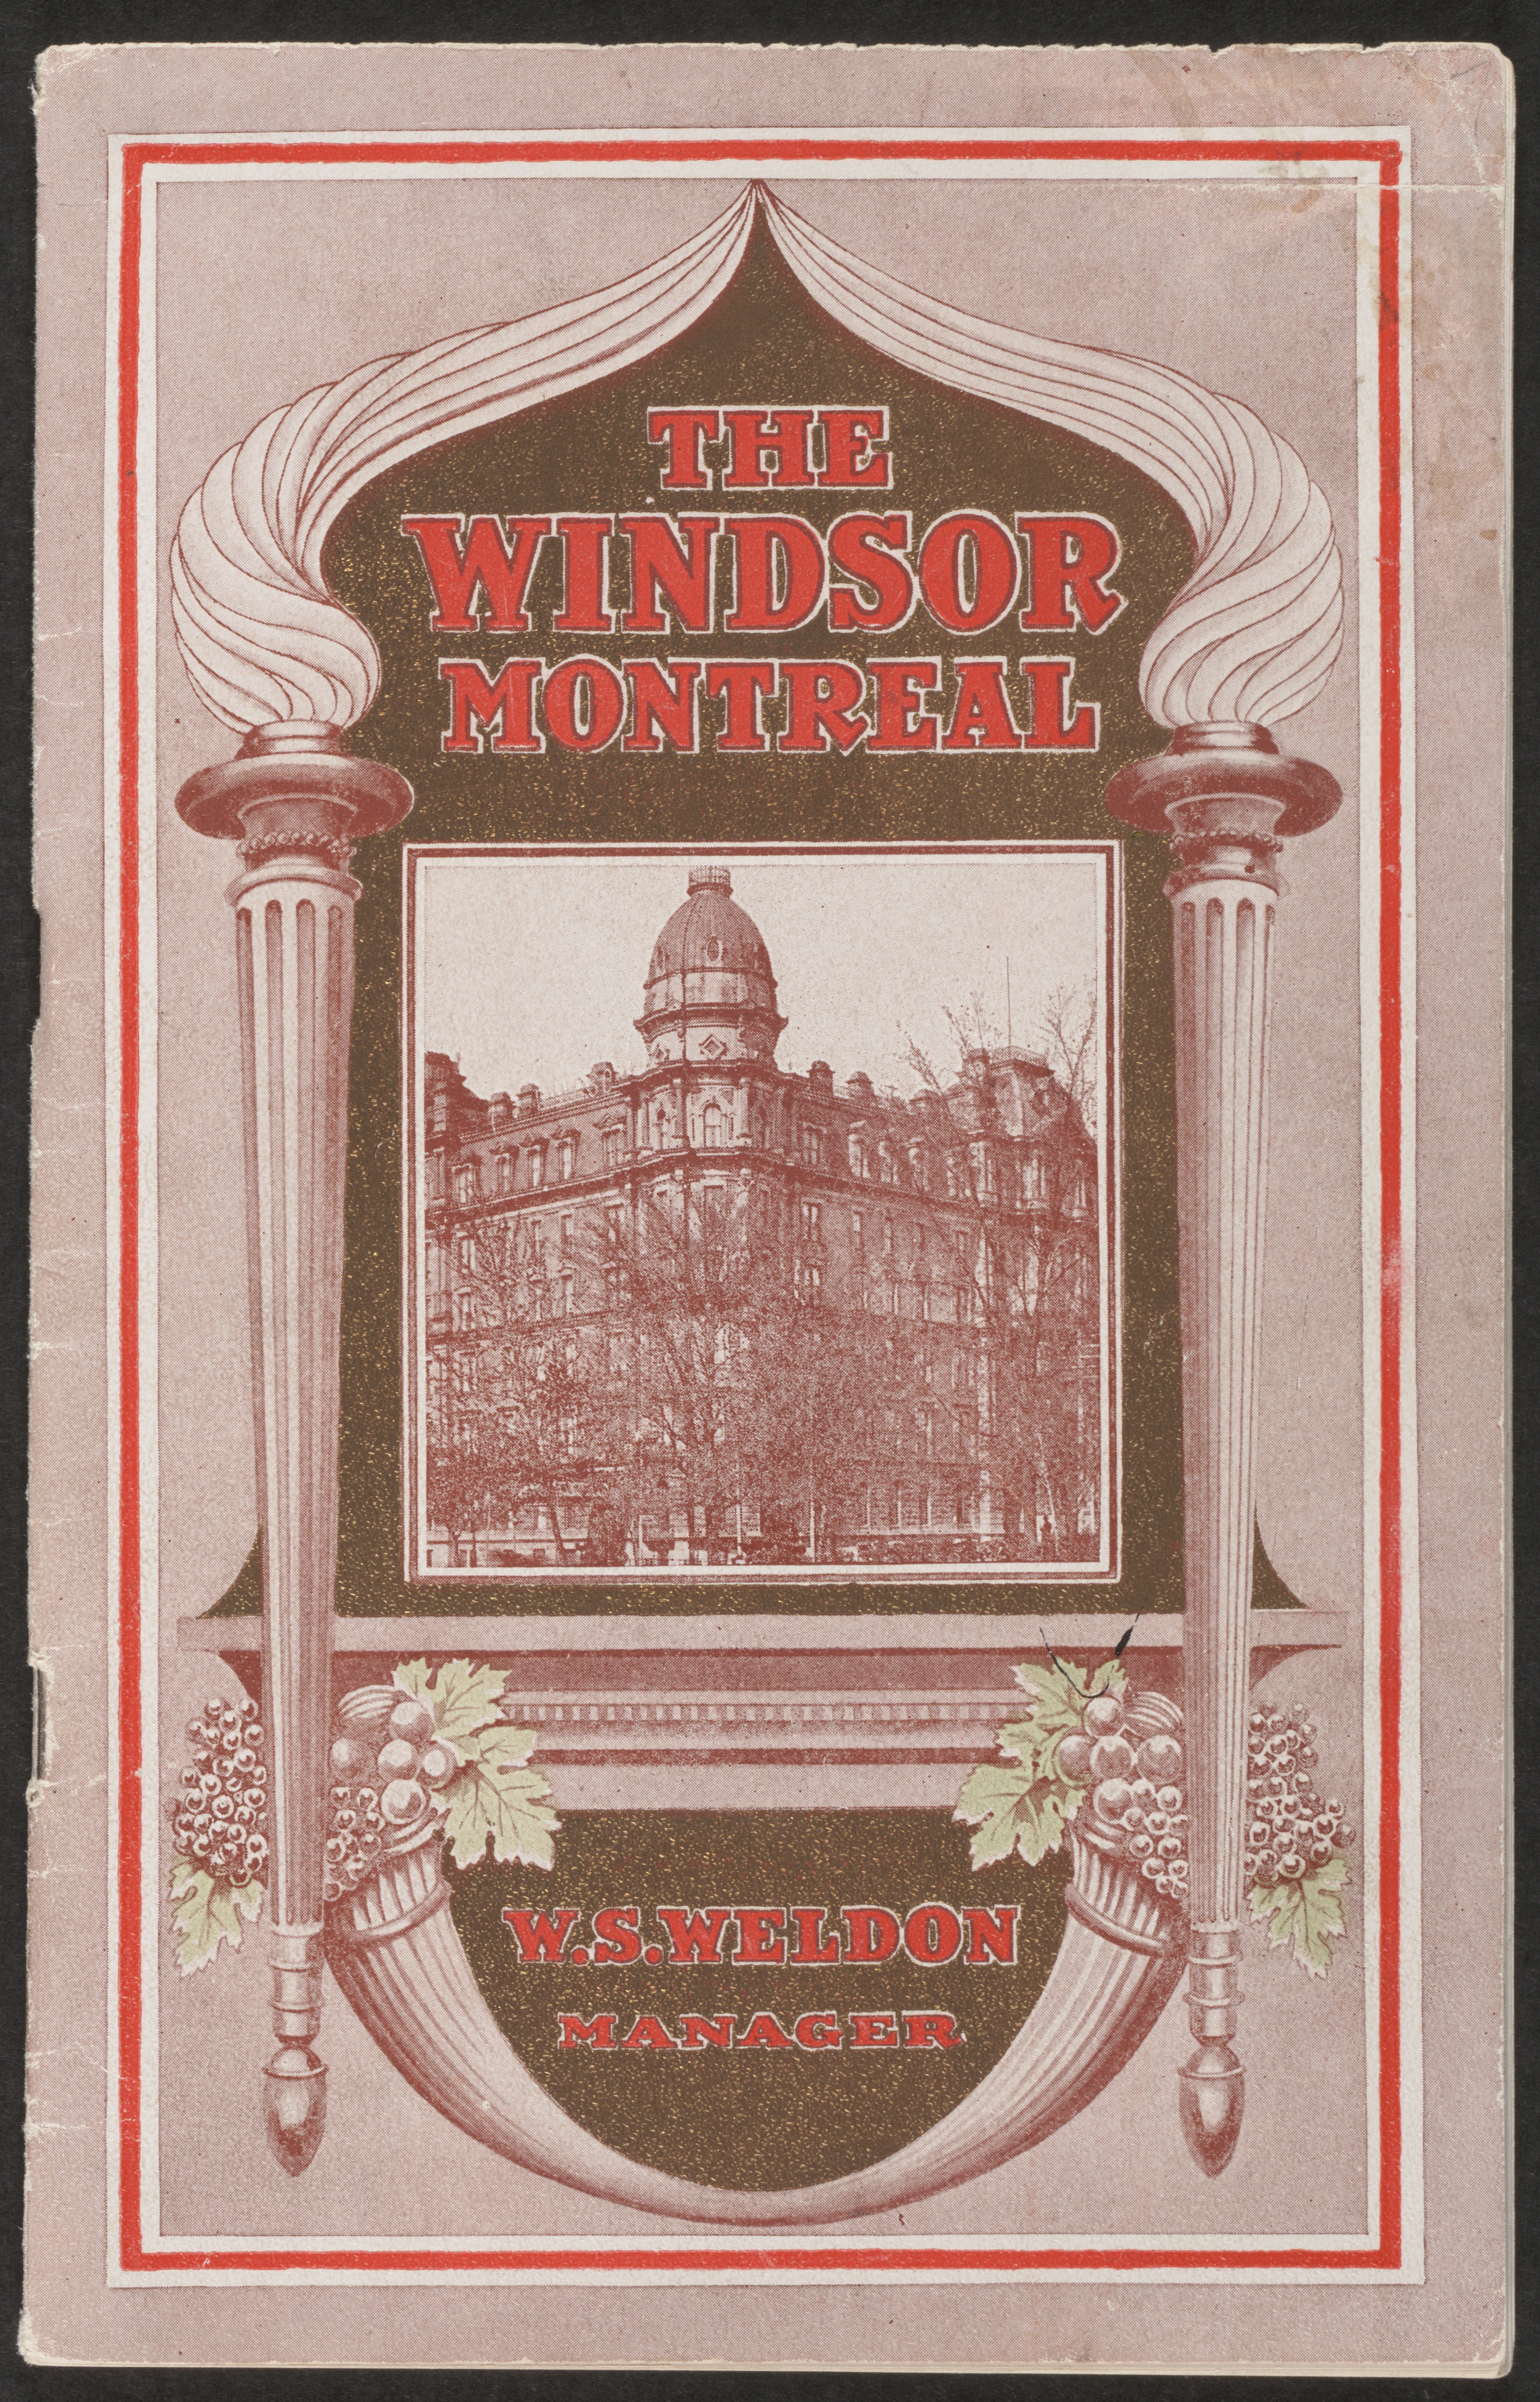 Cover of Weldon, W. S. (1905). The Windsor Hotel, Montreal. Montréal: International Railway Pub. Co.